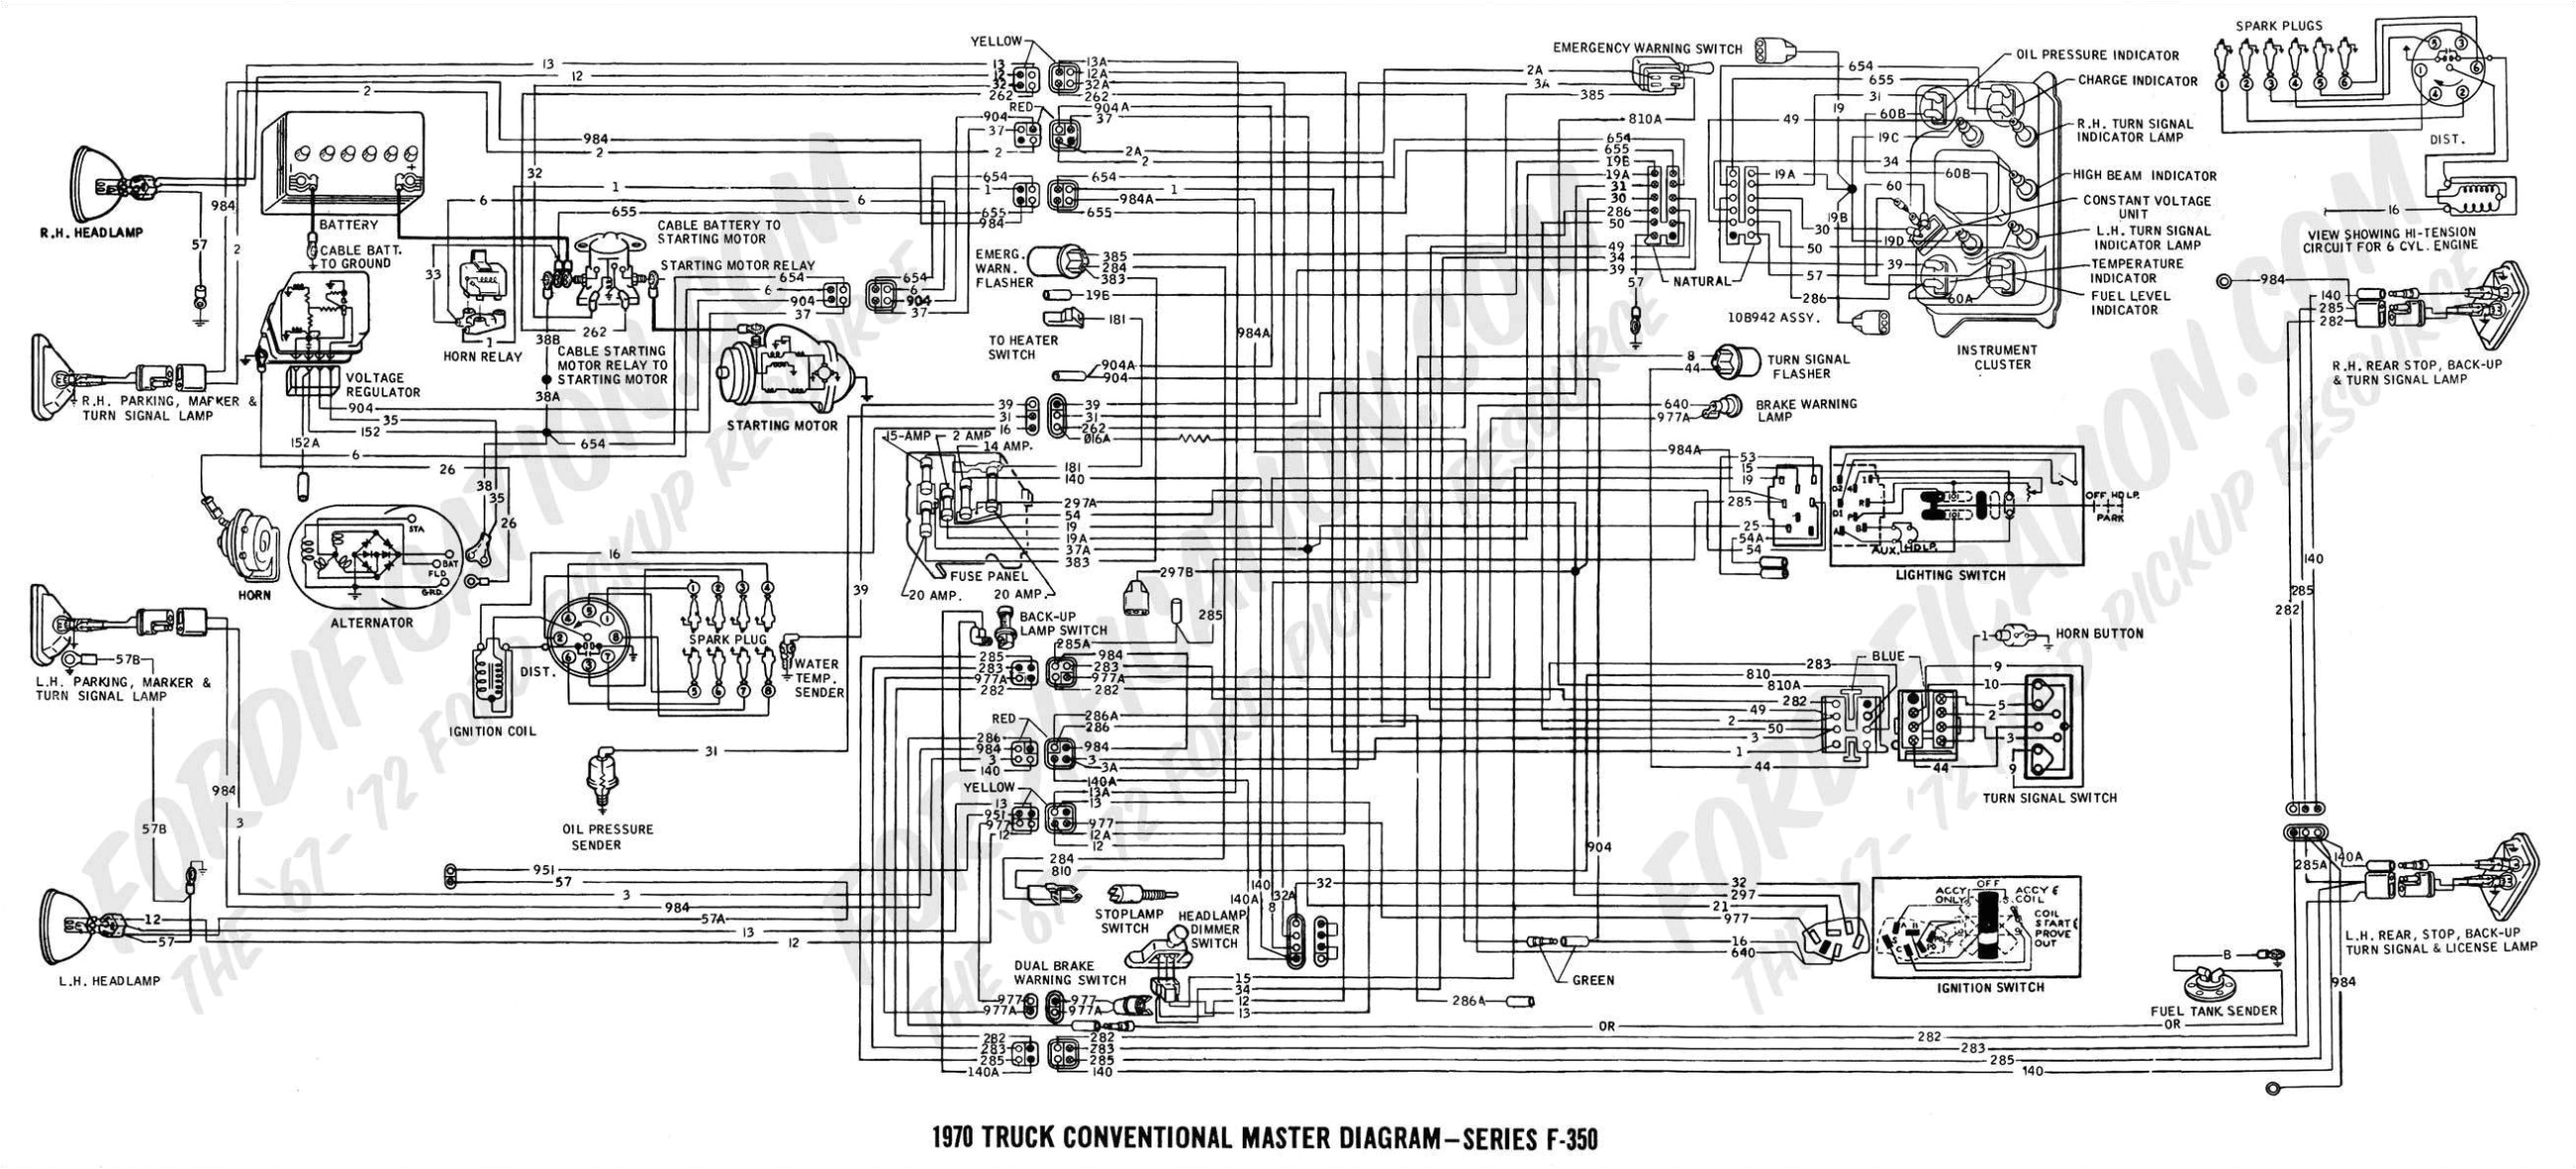 150 ac diagram 7 3 glow plug relay 2002 ford f550 fuse panel diagram 2007 ford f 150 ac diagram 7 3 glow plug relay 2002 ford f550 fuse